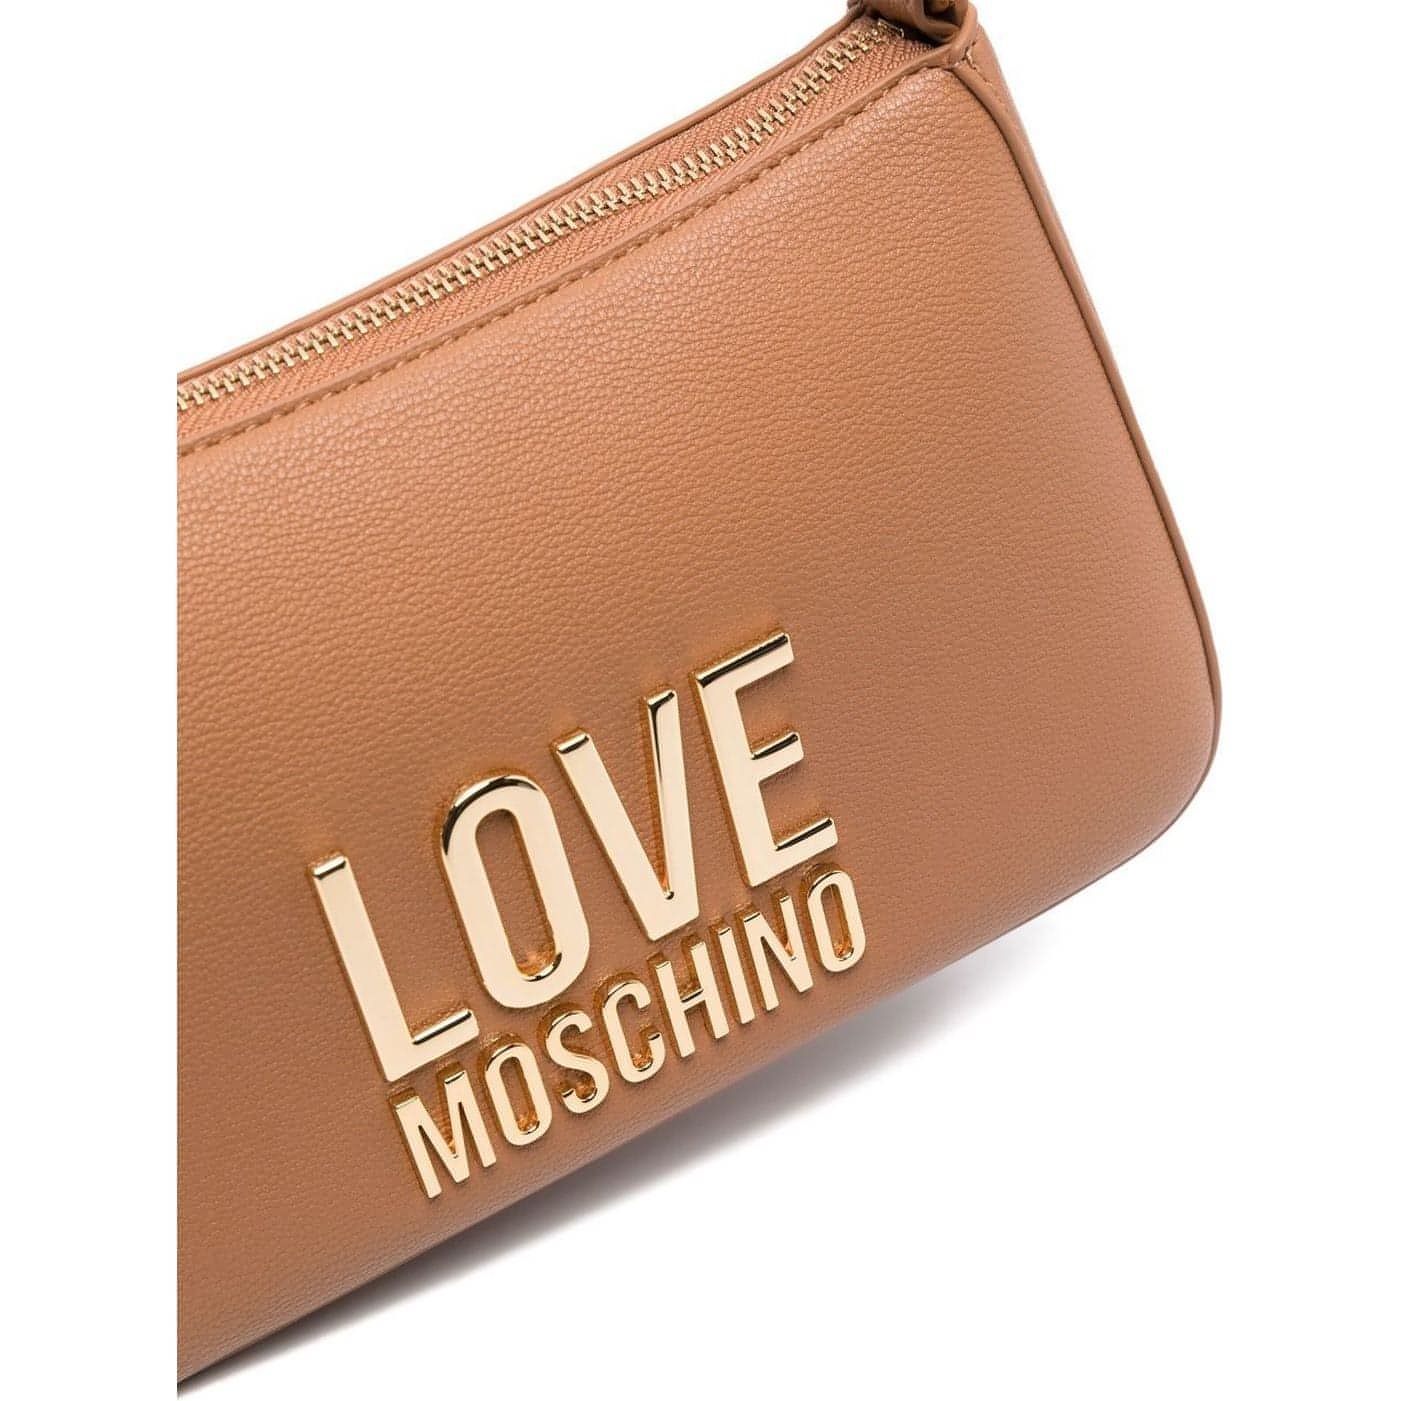 LOVE MOSCHINO moteriška ruda rankinė Top handle shoulder bag